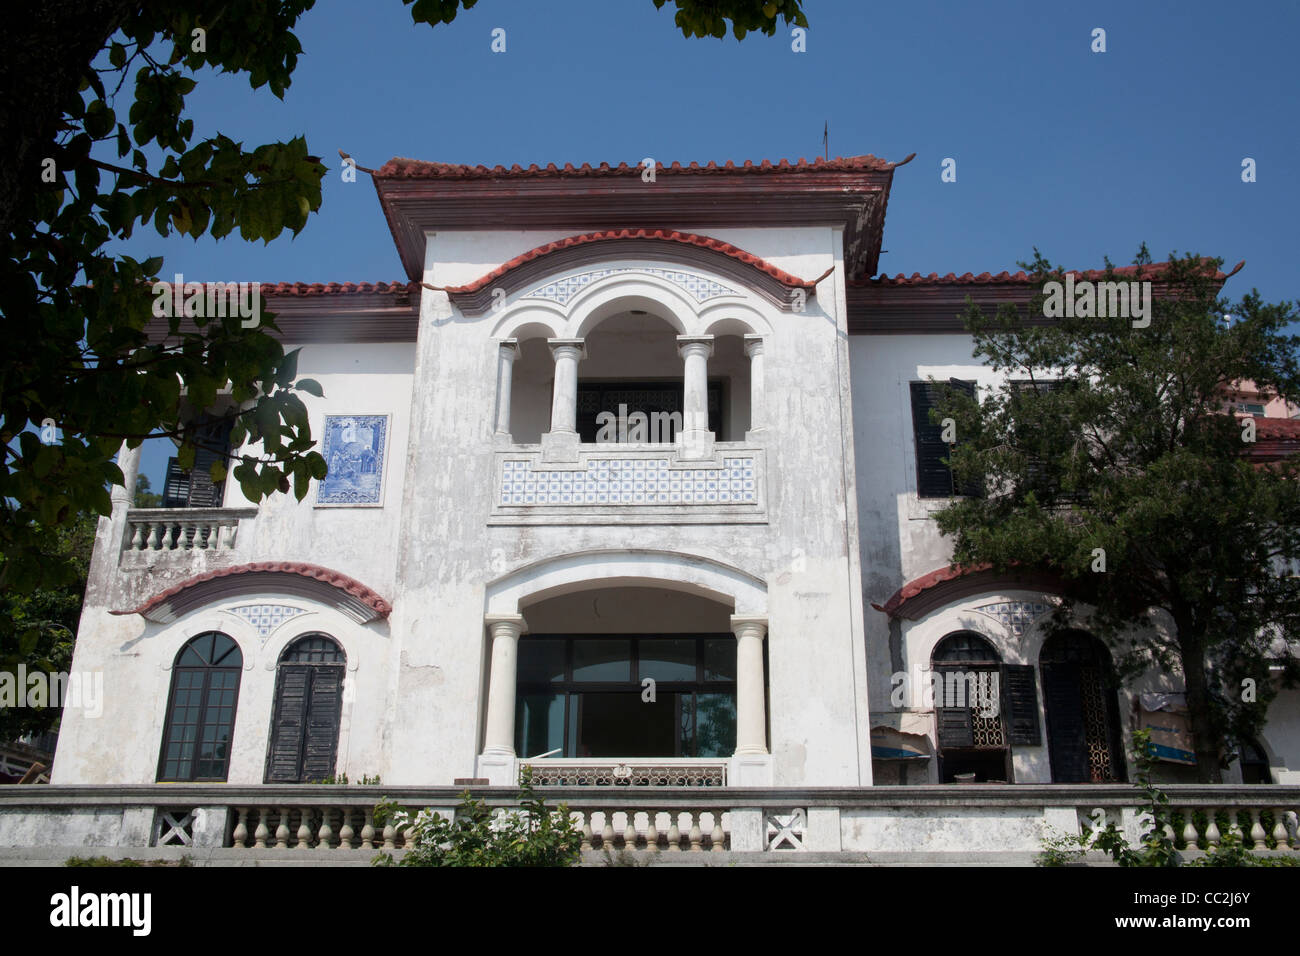 Portuguese colonial building on the Avenida da Republica Macau SAR China Stock Photo